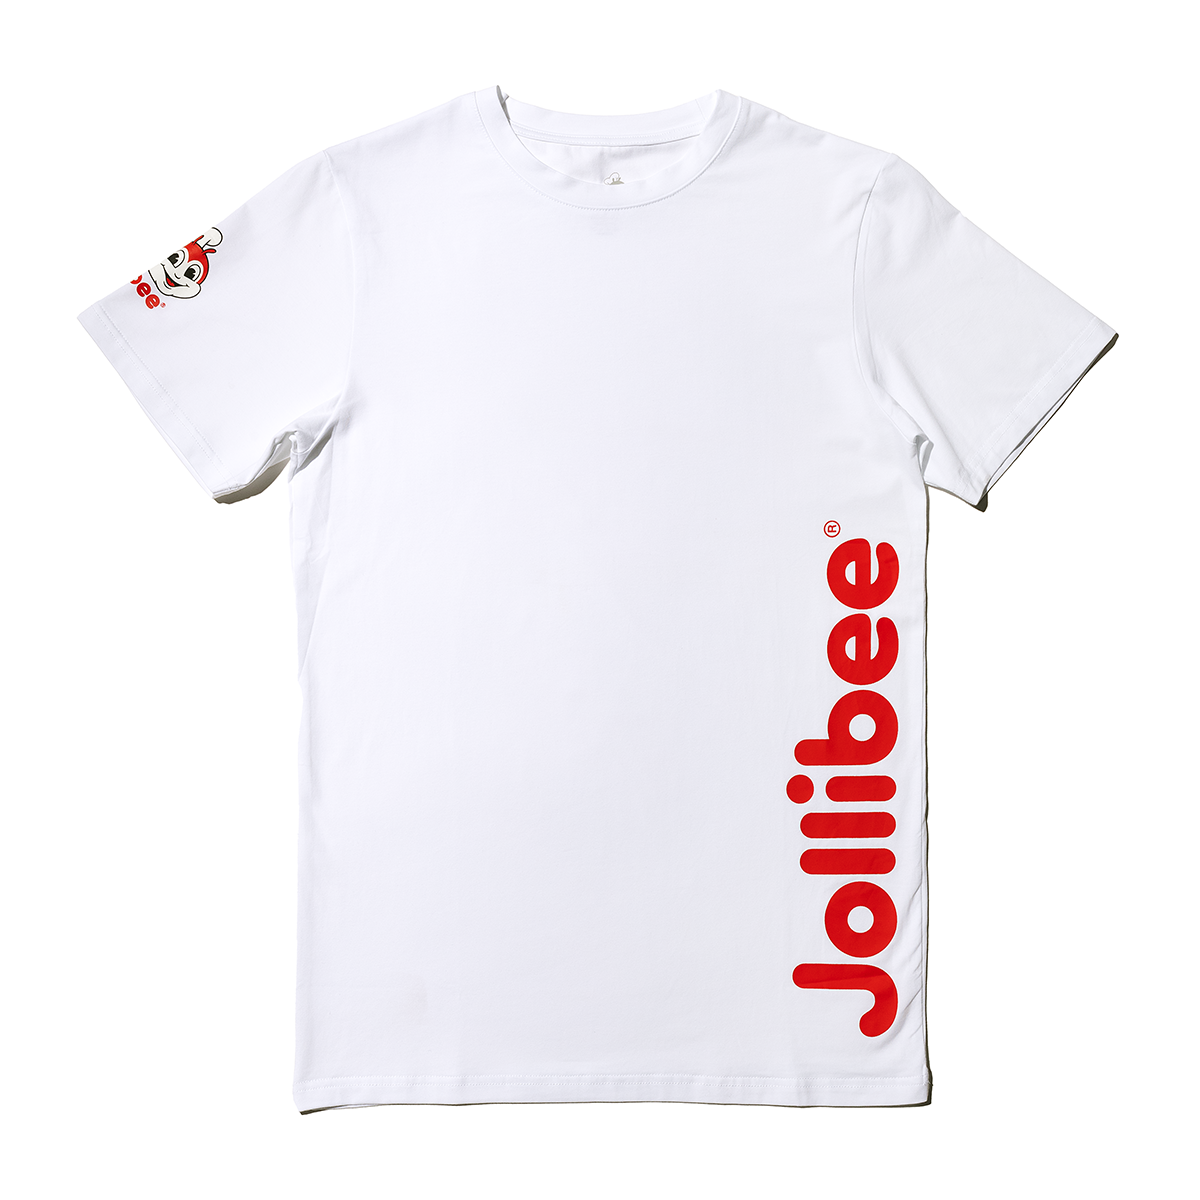 Jollibee Classic Jollibee White T-shirt | Jolly Merch Shop